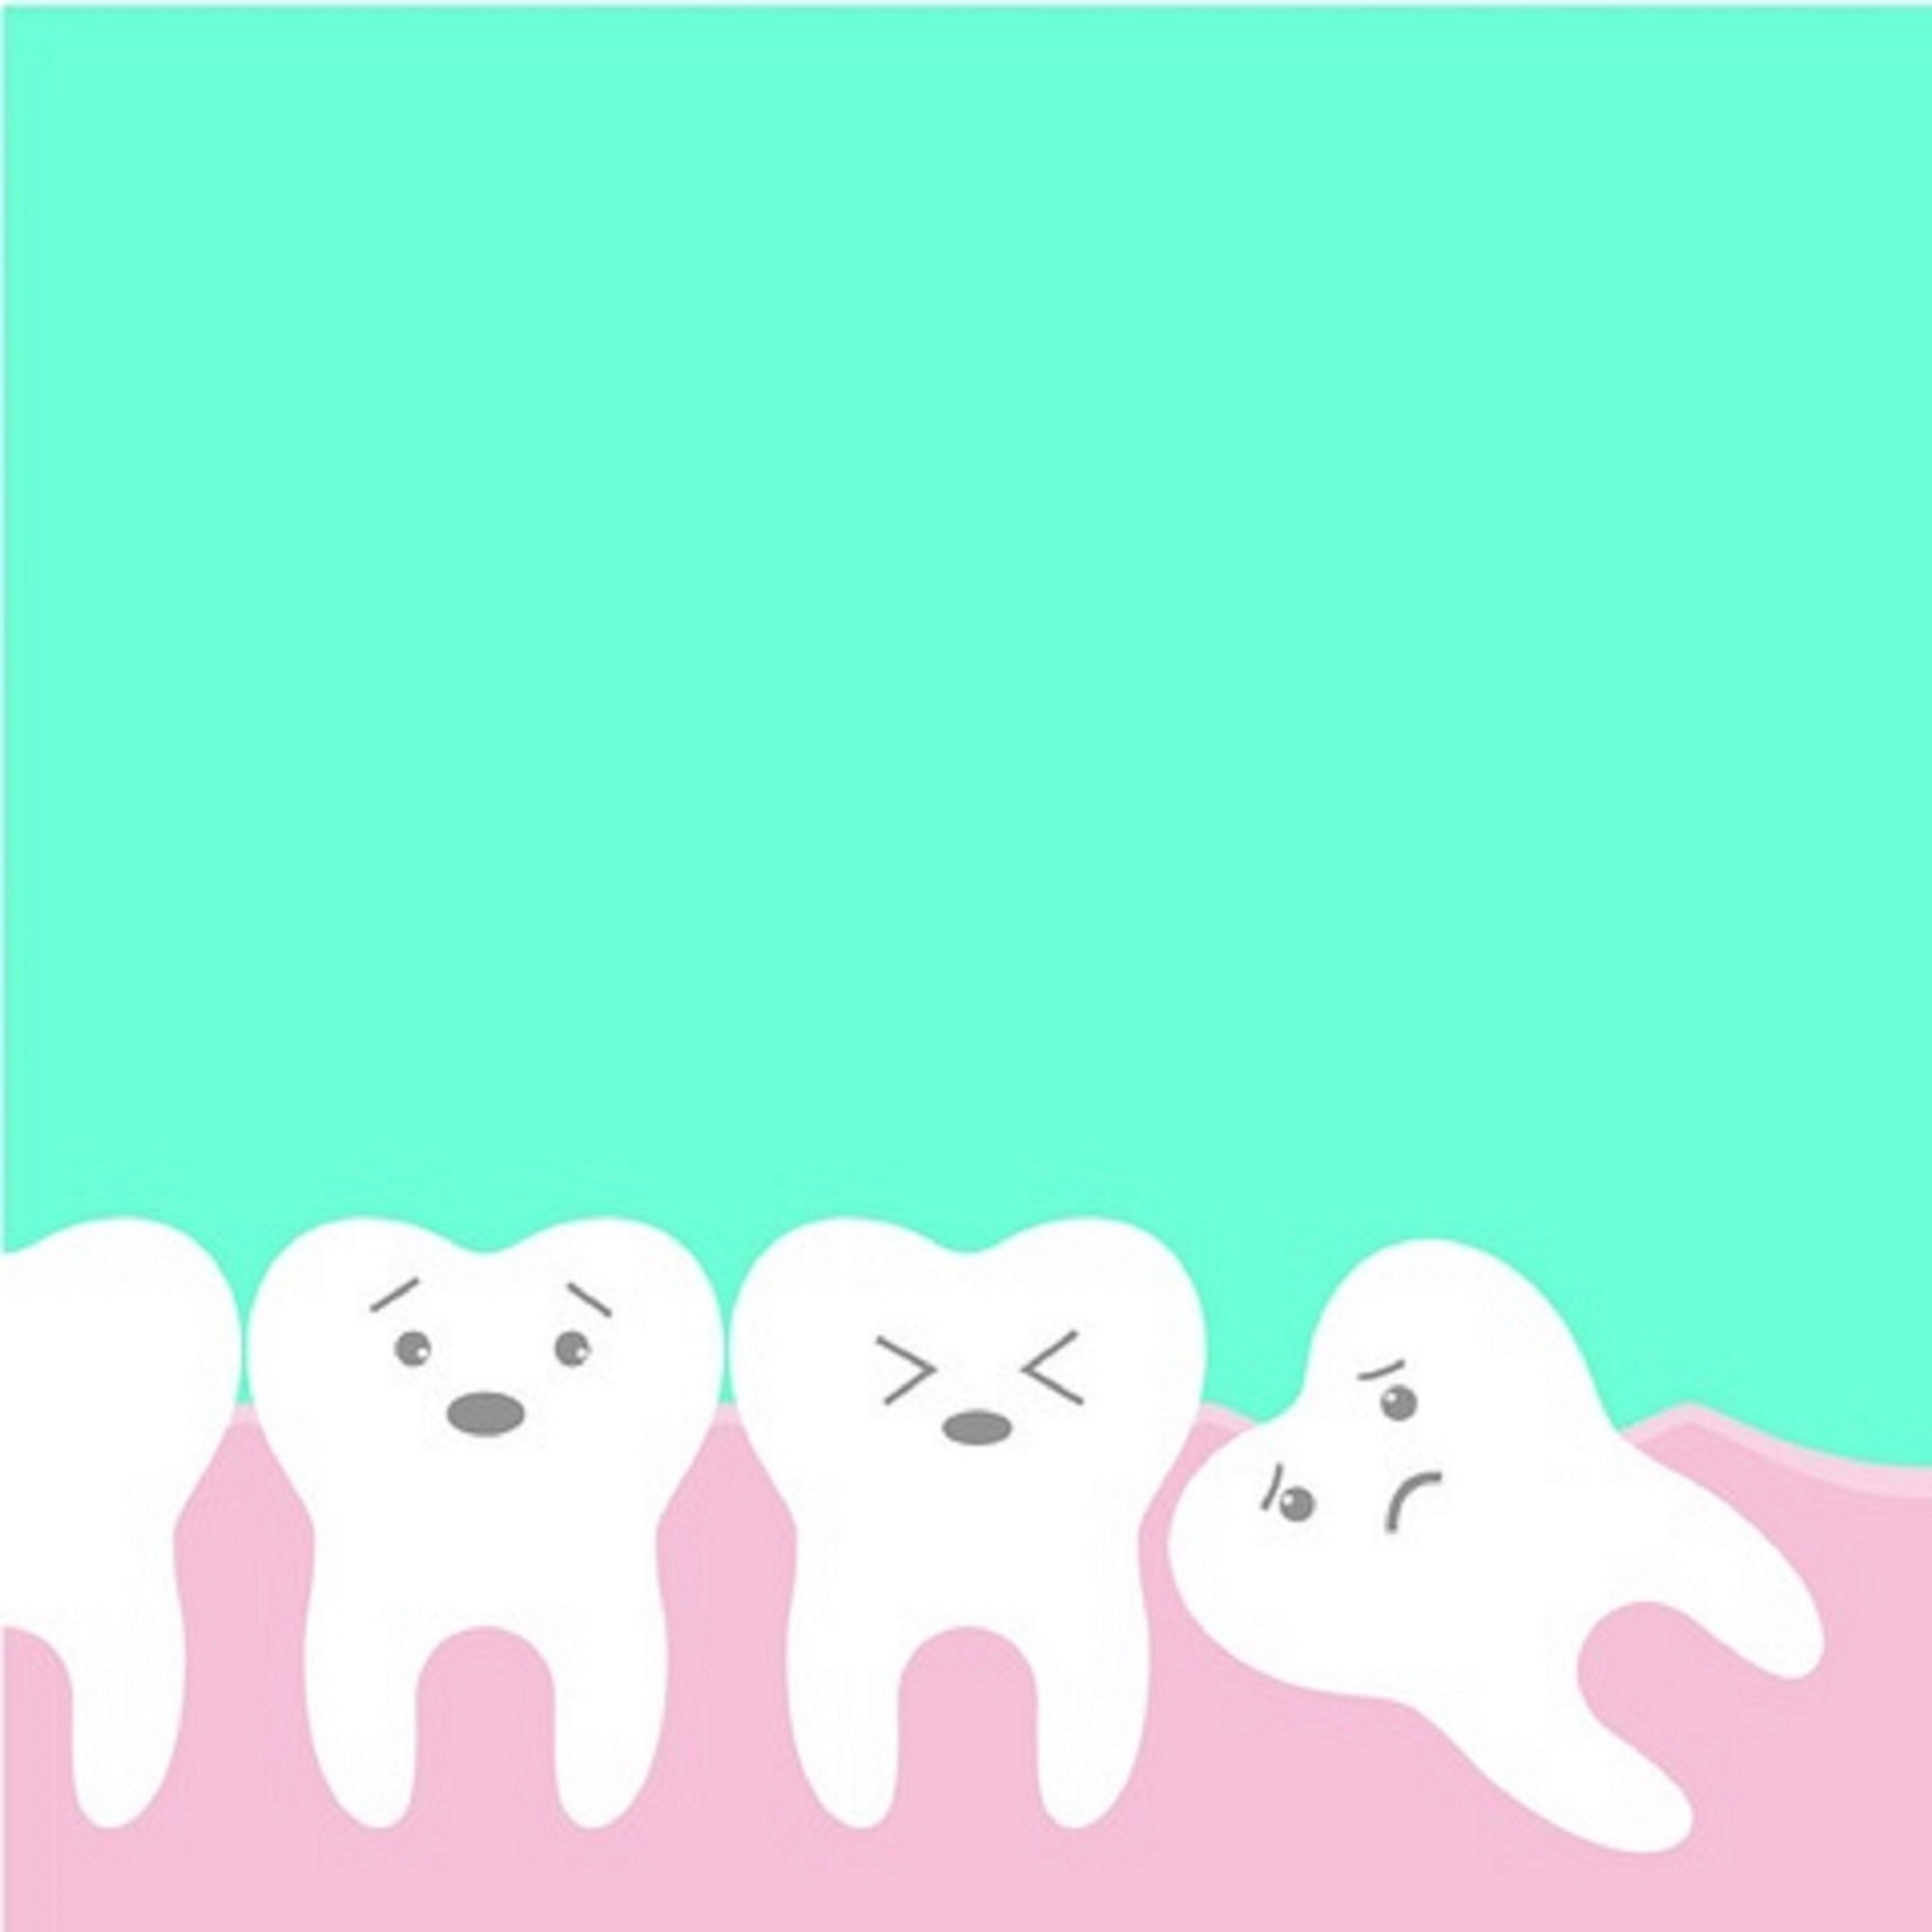 Free of dental, dentist, dentistry